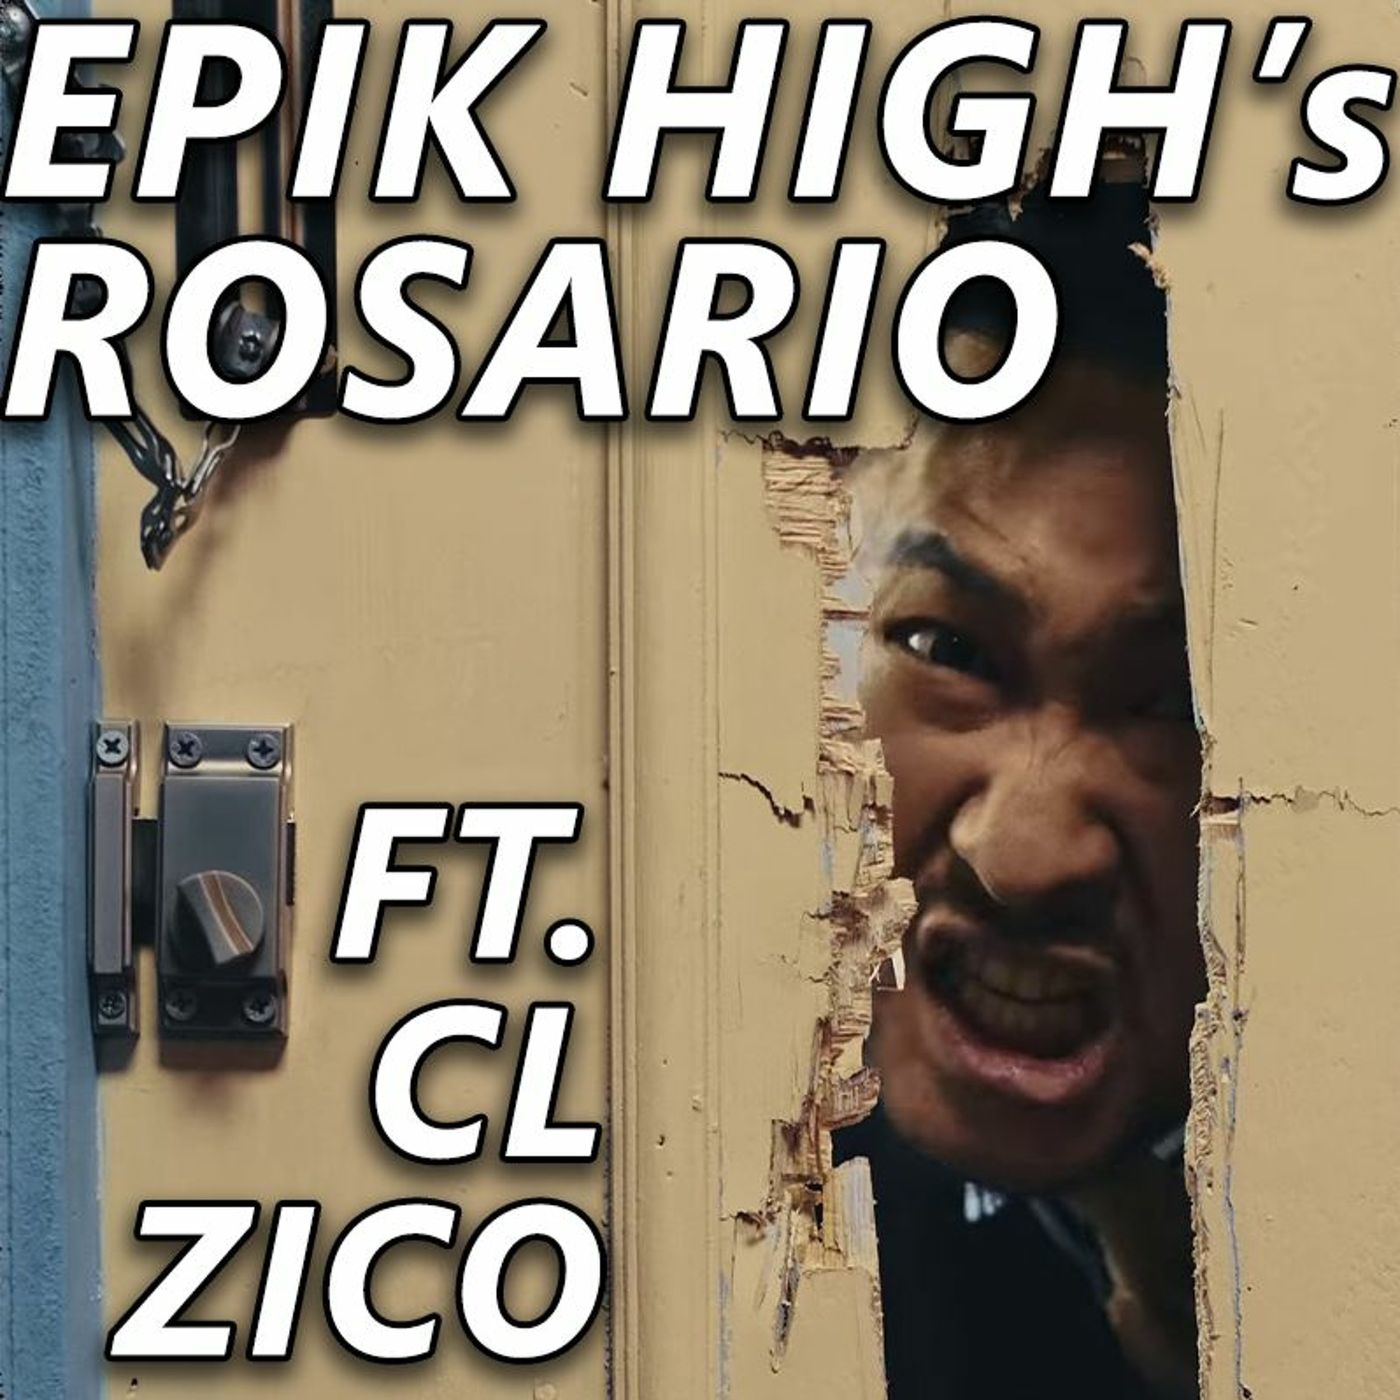 Epik High’s Rosario